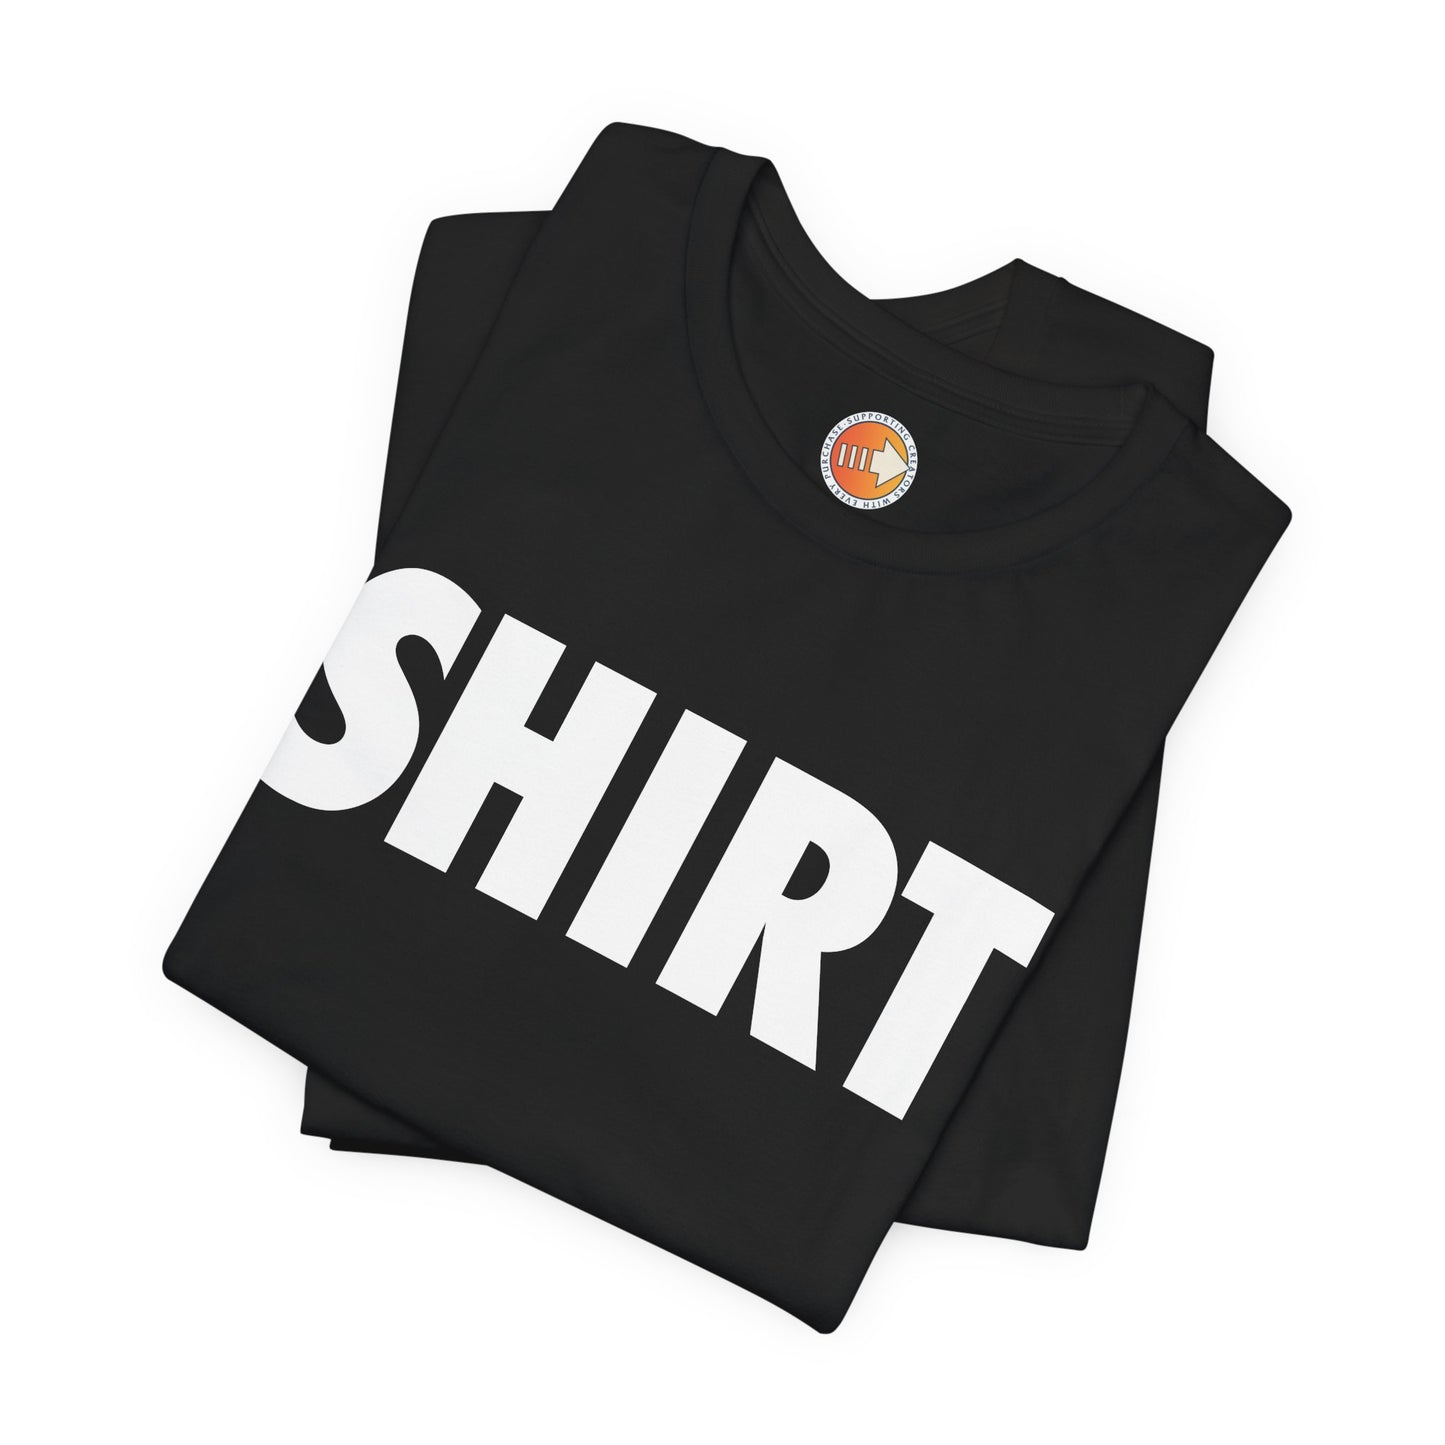 SHIRT Shirt (white text) - Unisex Jersey Short Sleeve Tee - The Gamers